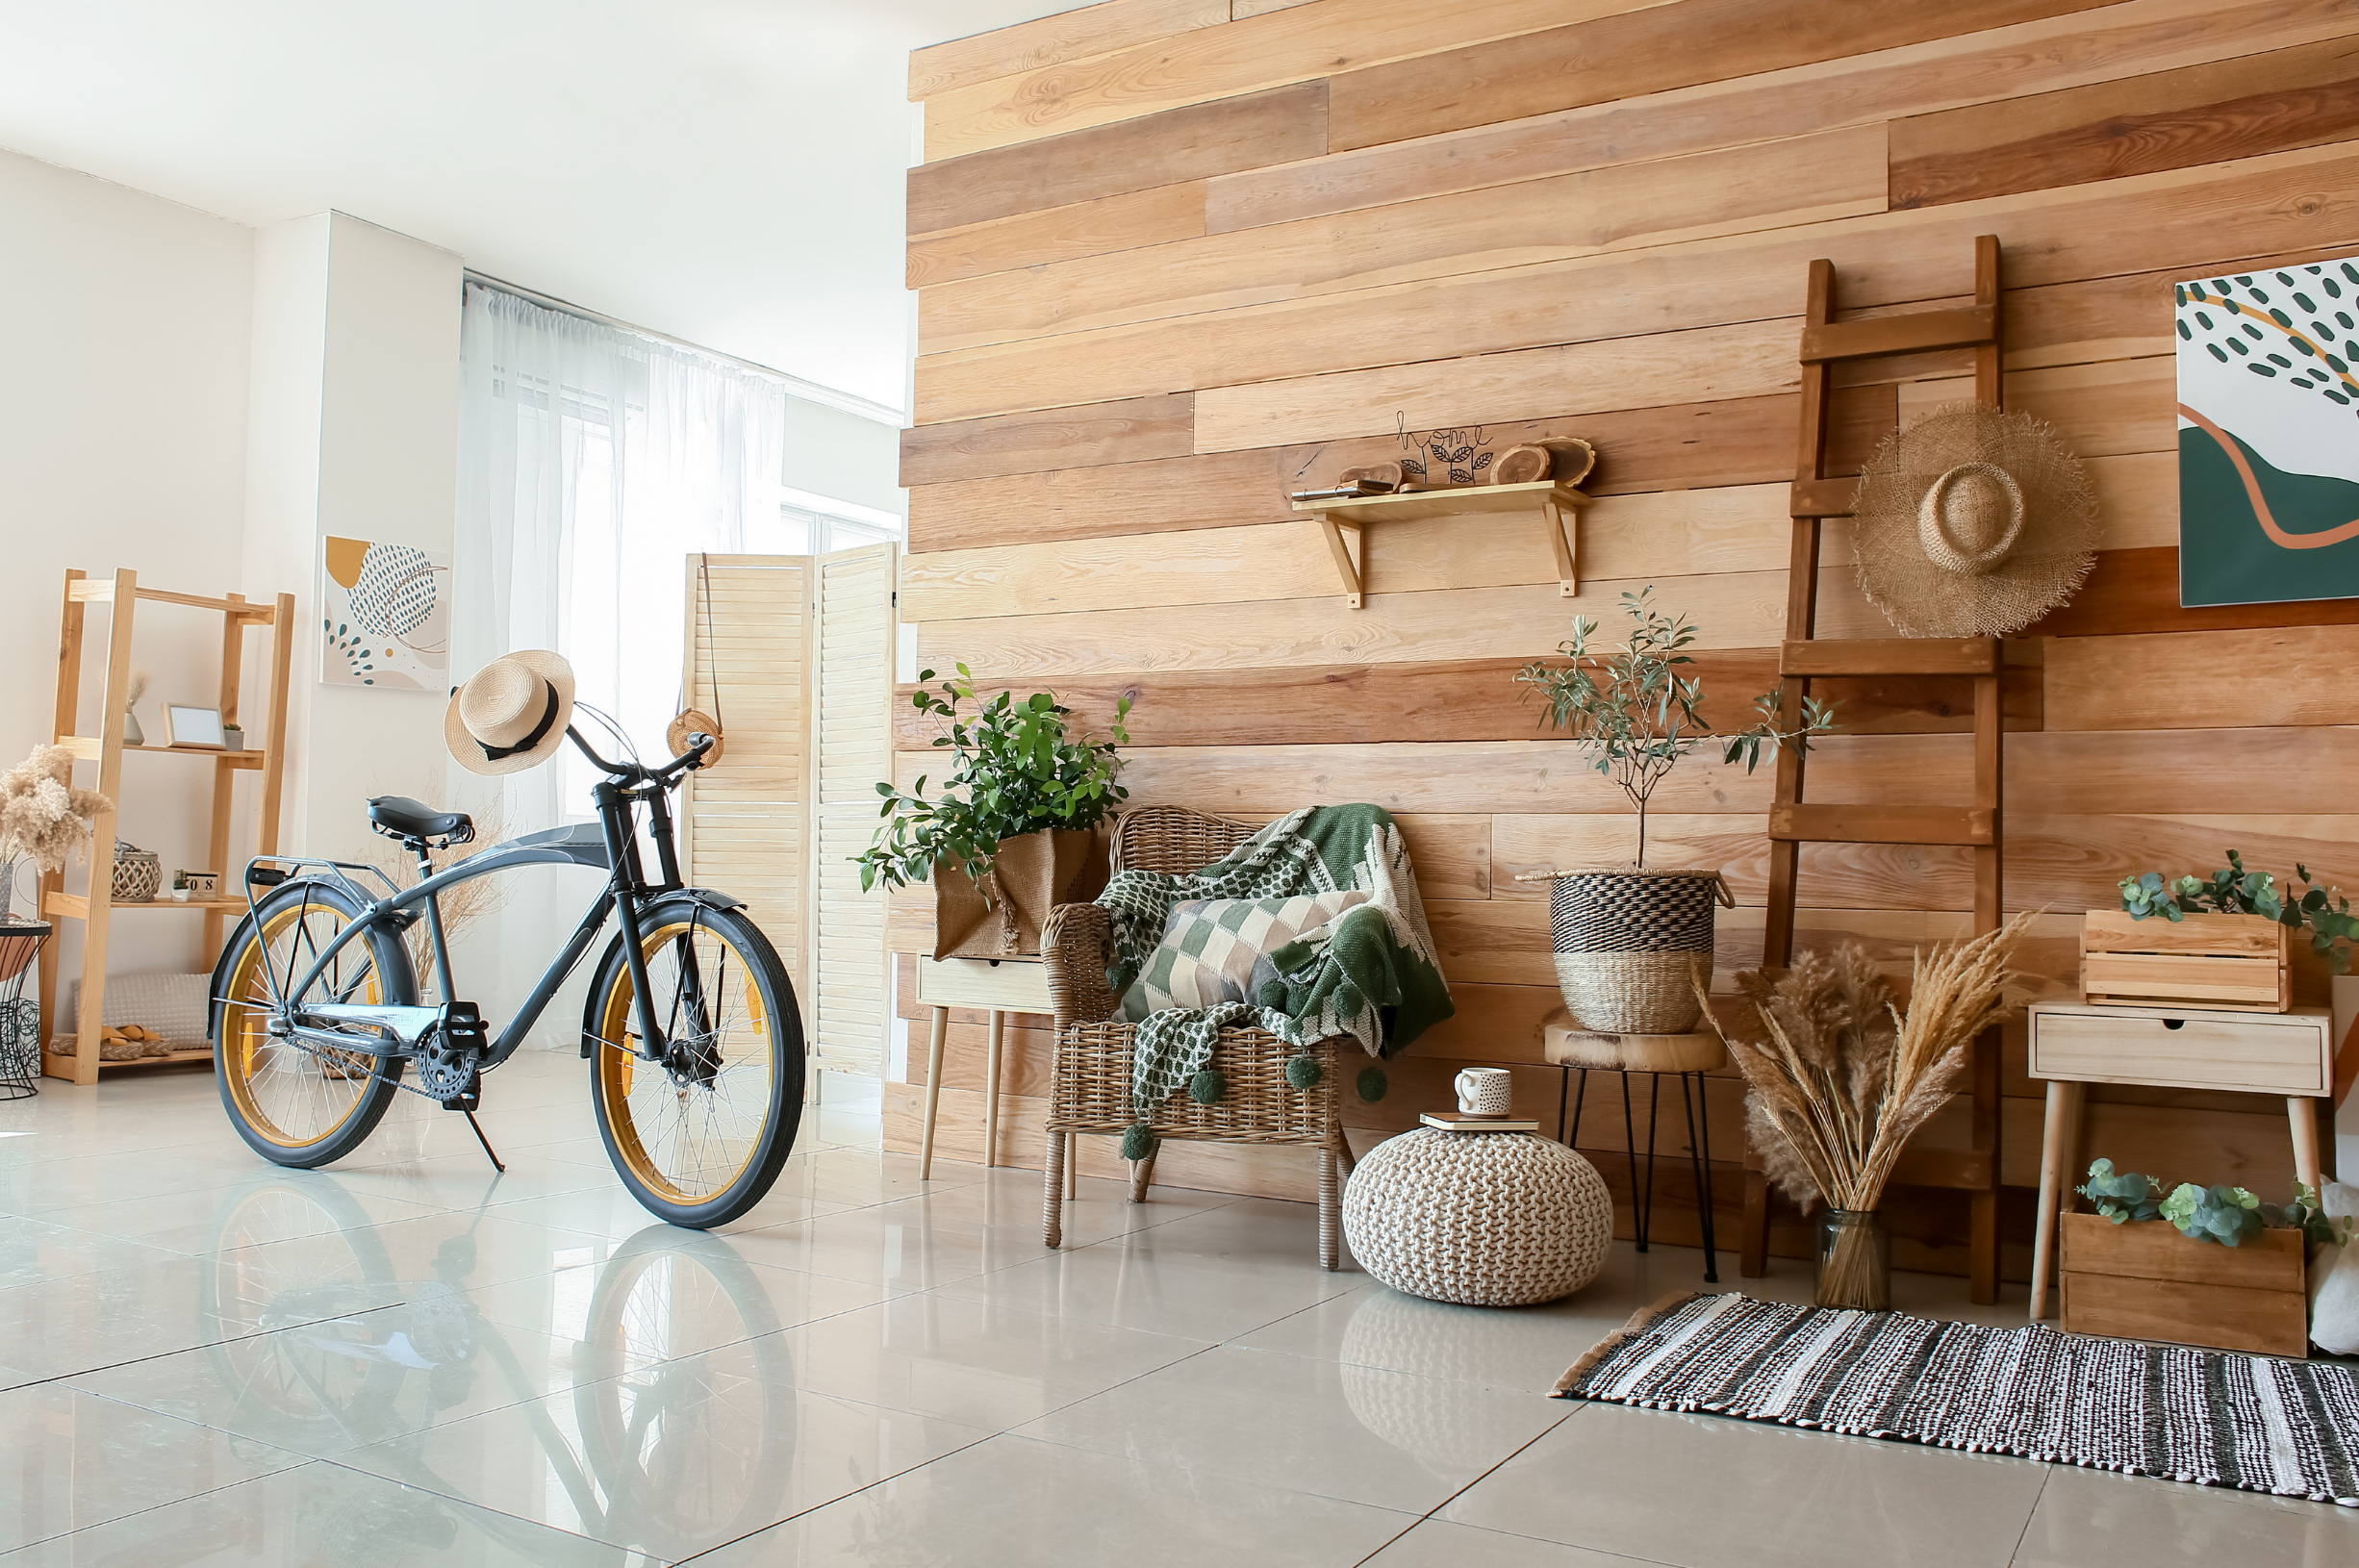 Reclaimed wooden pallet wall accent piece inside a modern home.